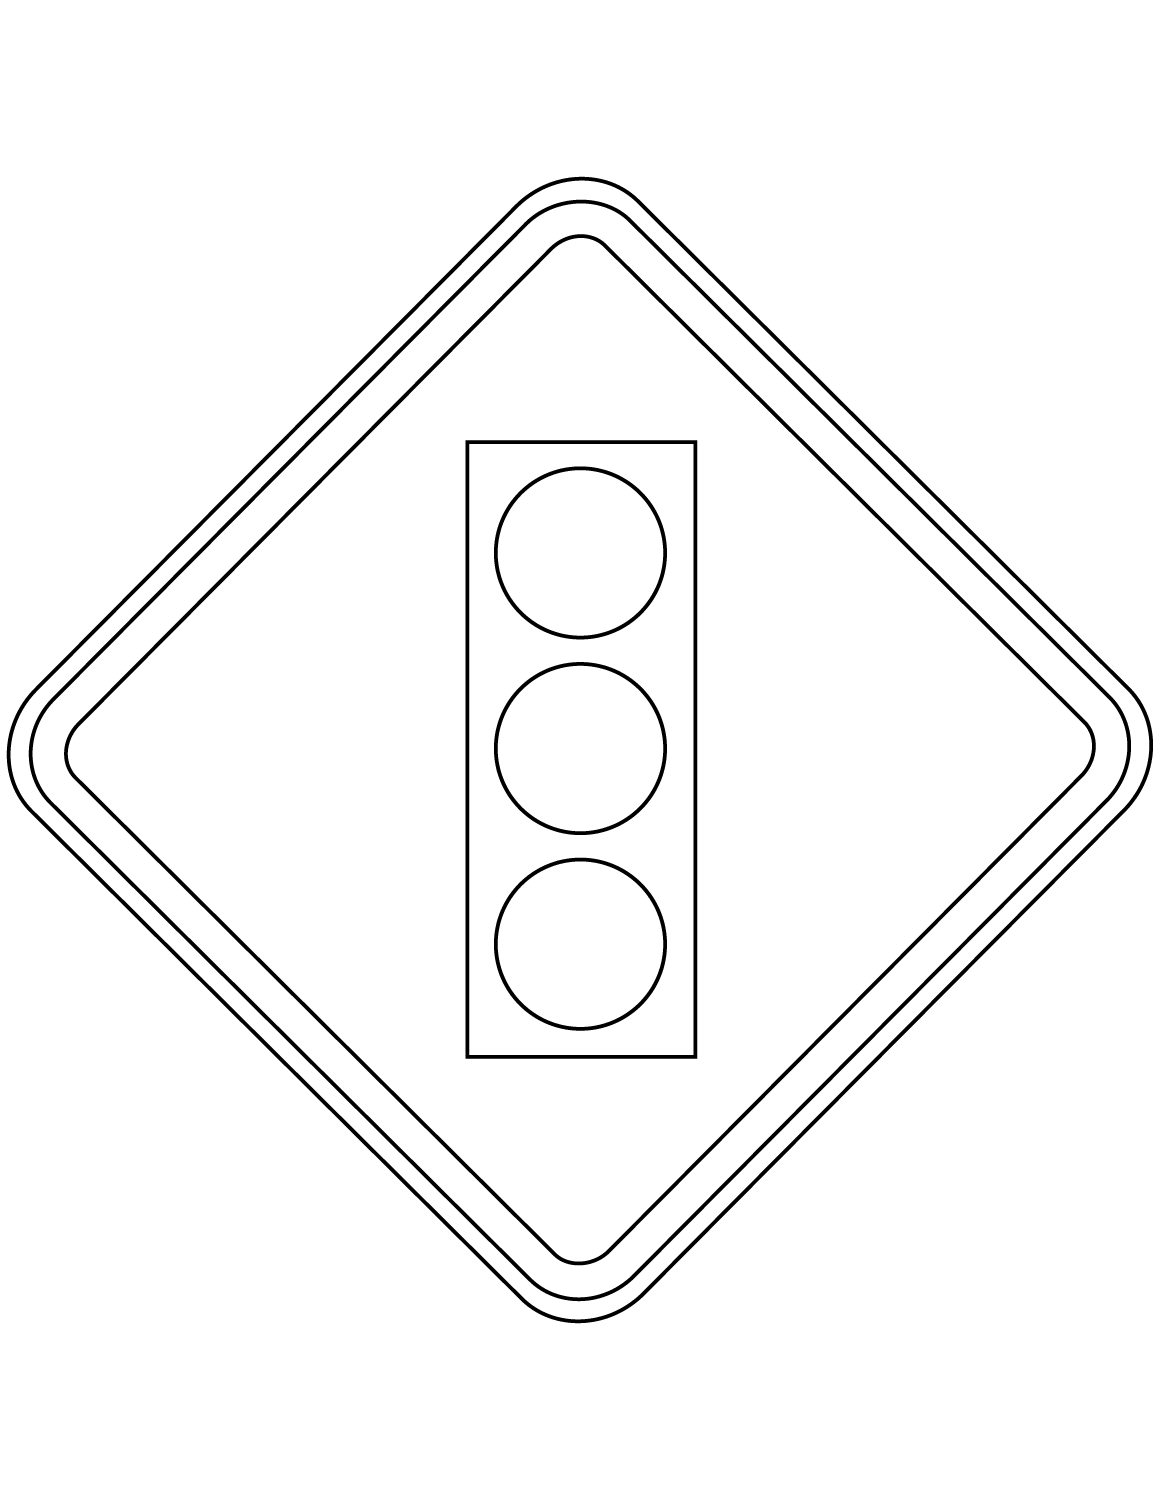 светофор шаблон для аппликации 2